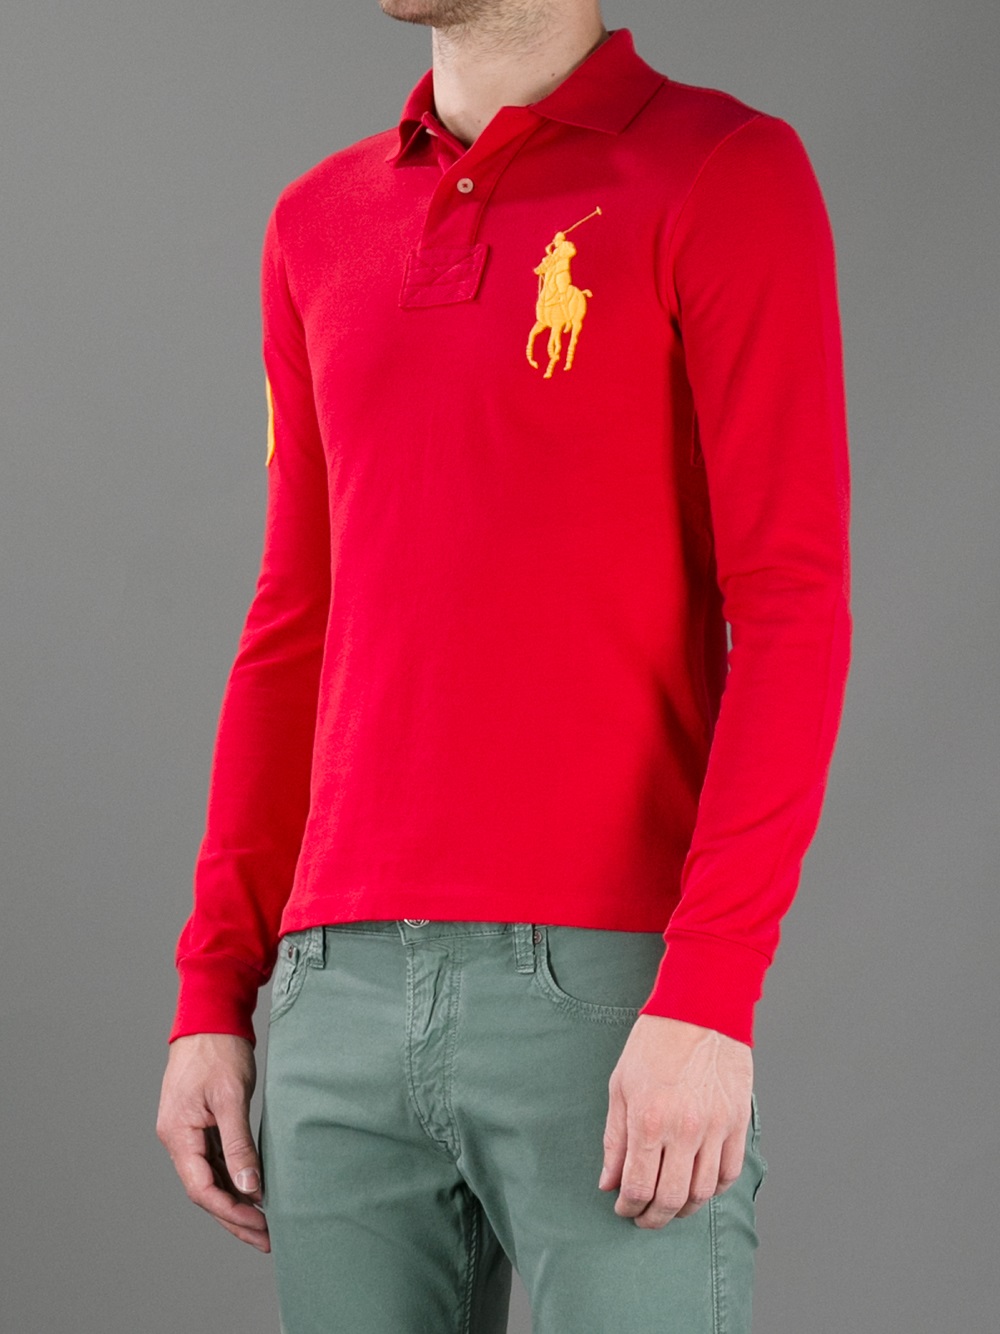 Lyst - Ralph Lauren Long Sleeve Polo Shirt in Red for Men